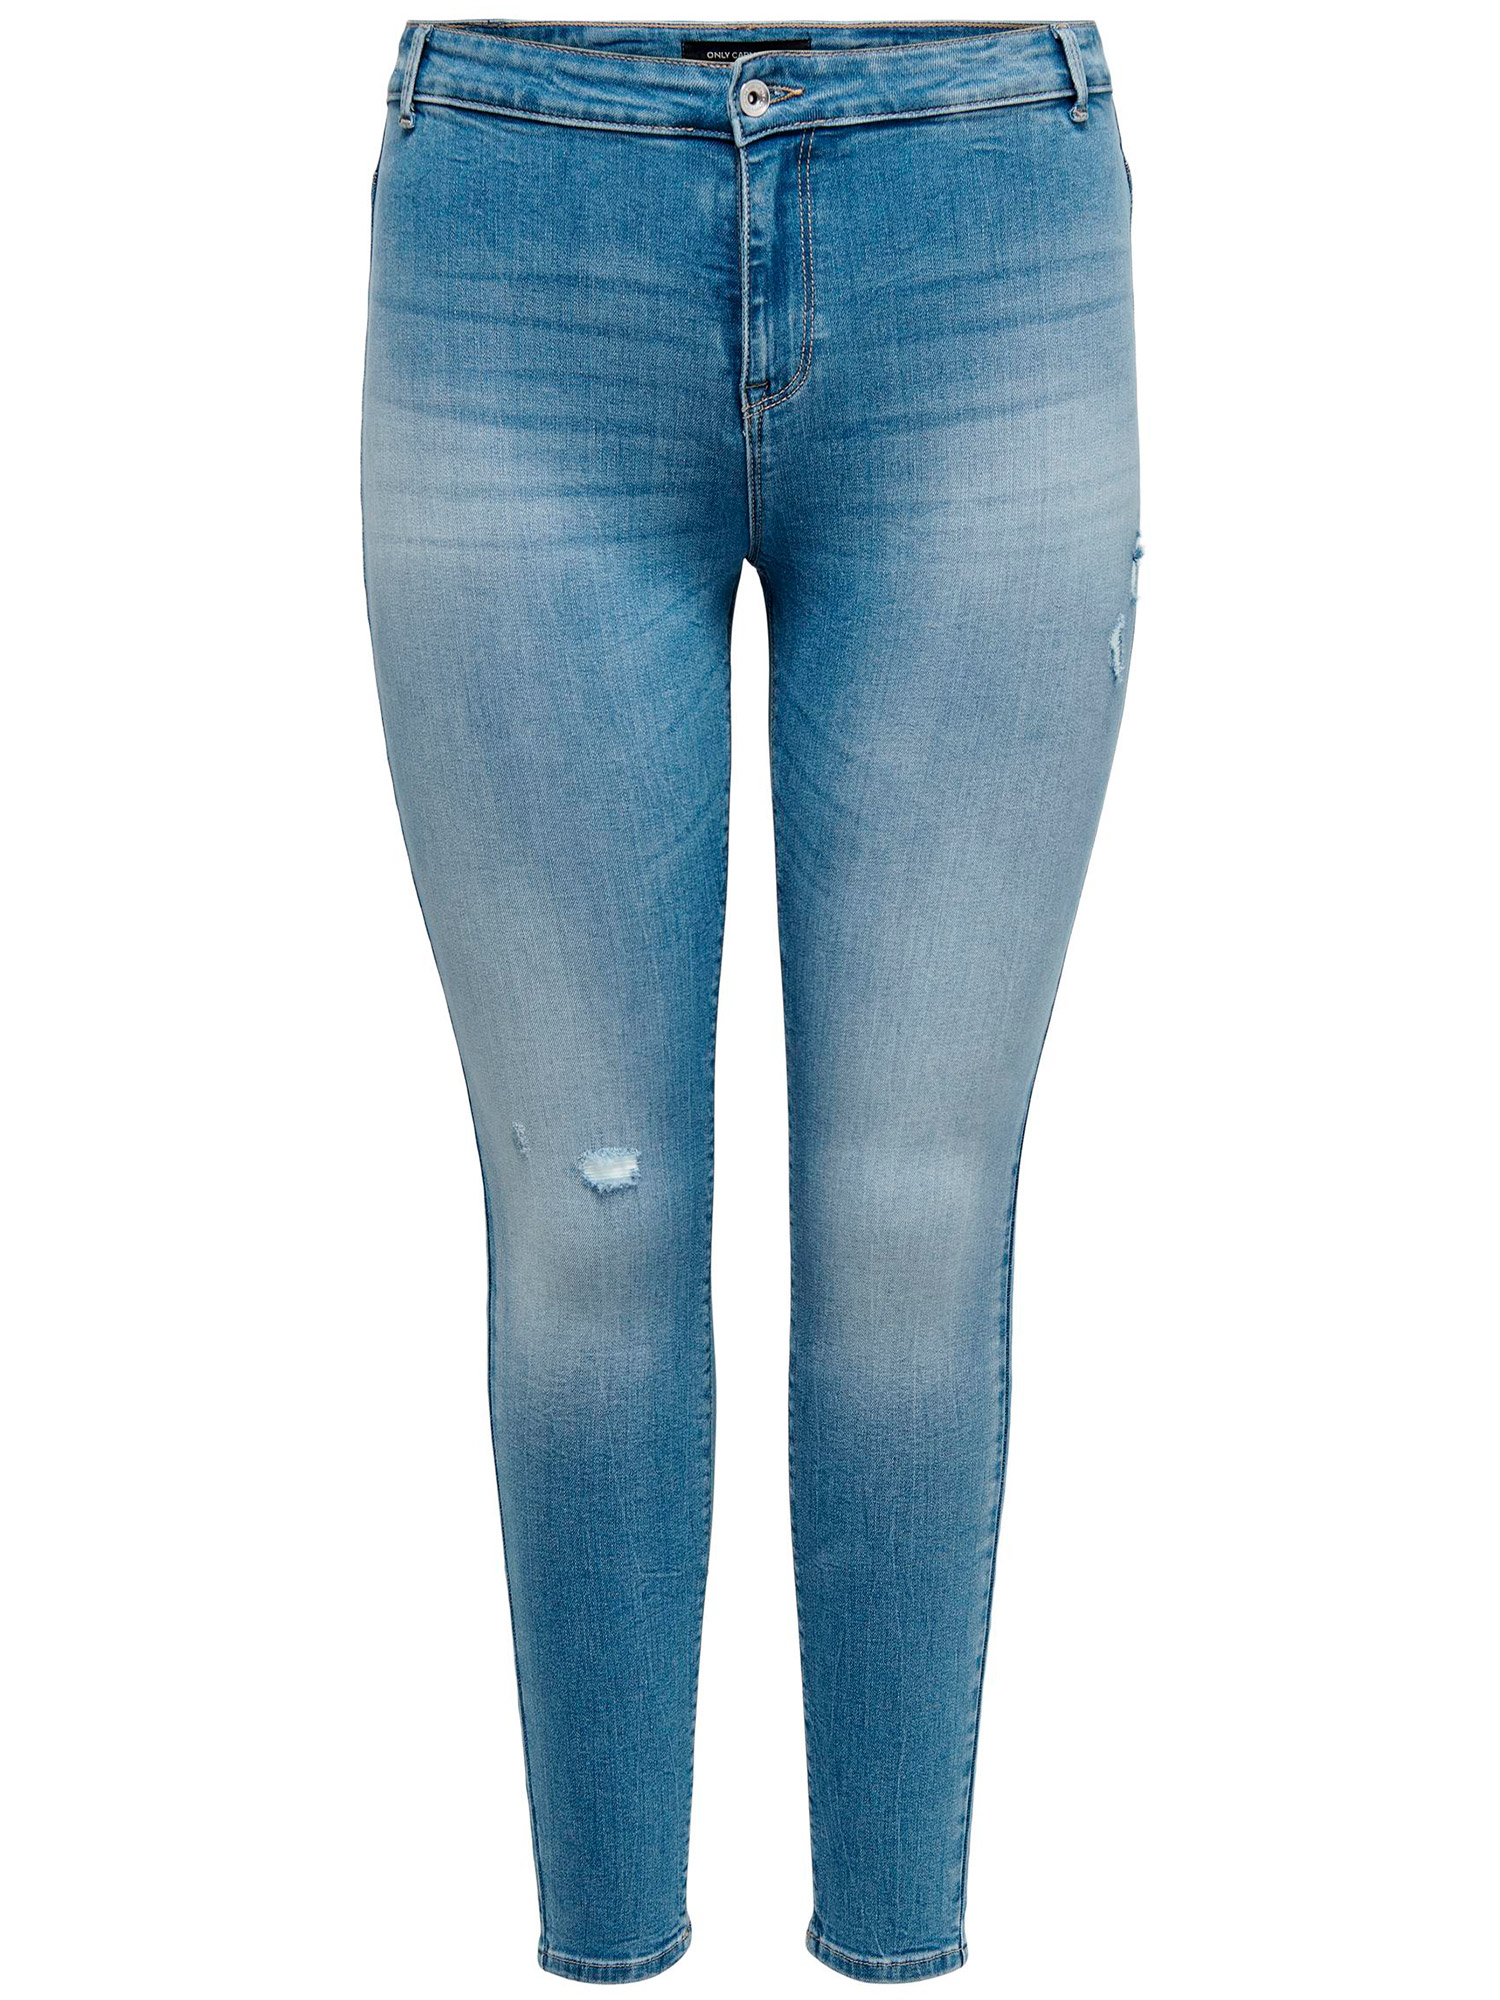 HUBA - Ljusblå jeans i superstretch fra Only Carmakoma